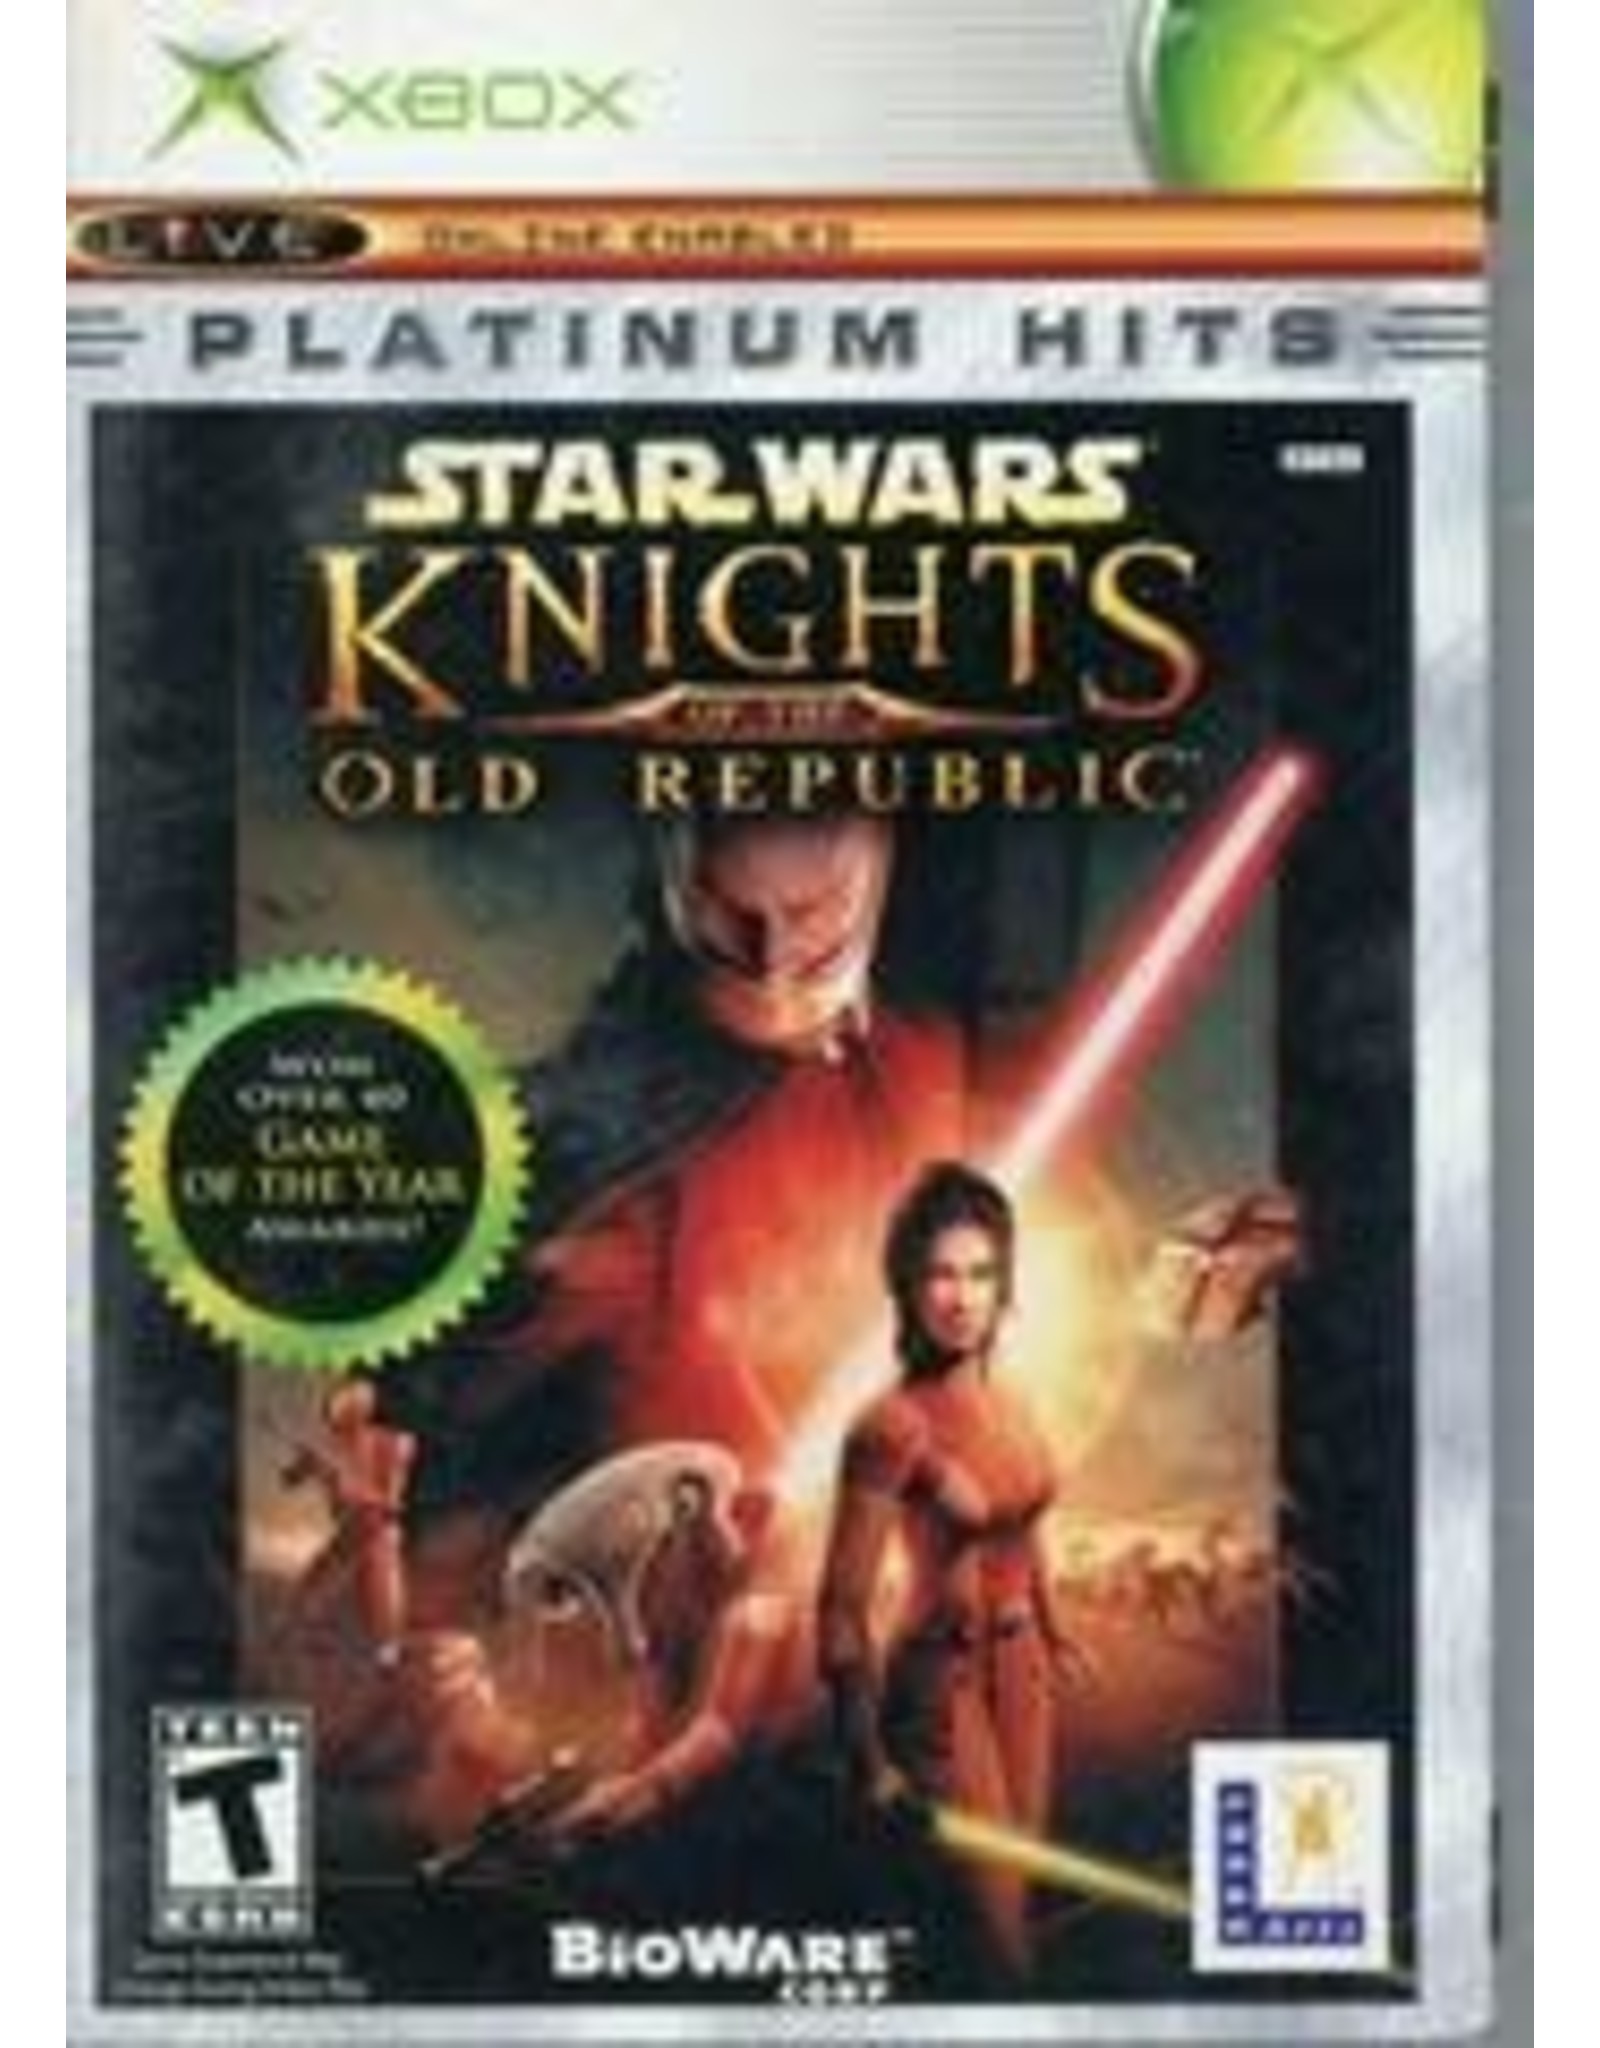 Xbox Star Wars Knights of the Old Republic (Platinum Hits, CiB)